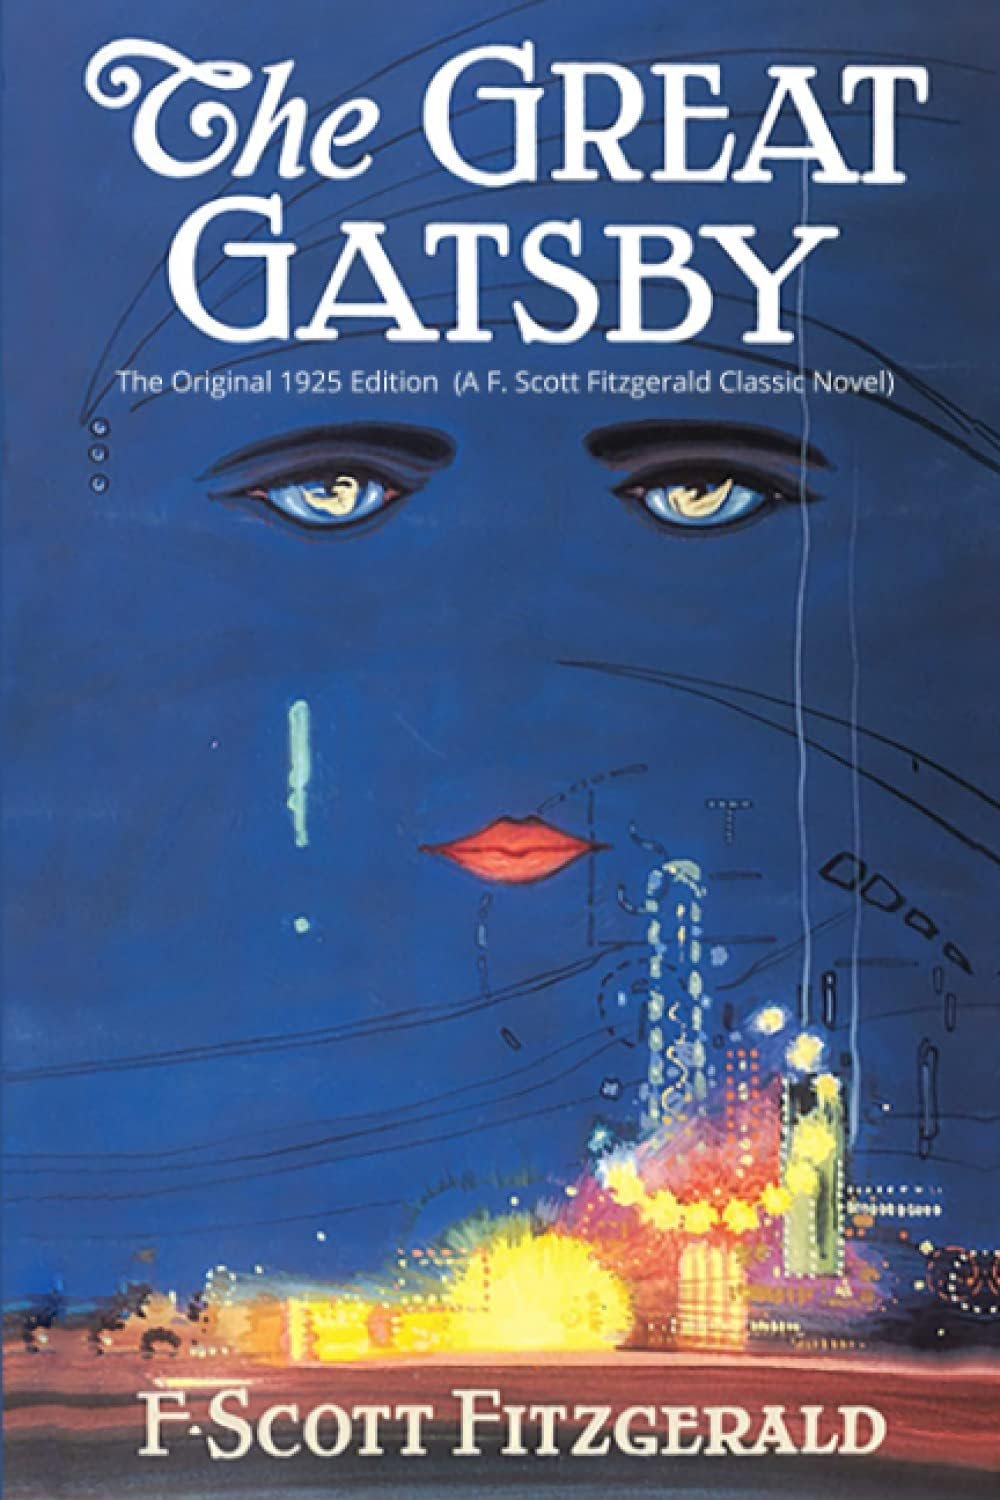 The Great Gatsby: The Original 1925 Edition (A F. Scott Fitzgerald Classic Novel) Cover